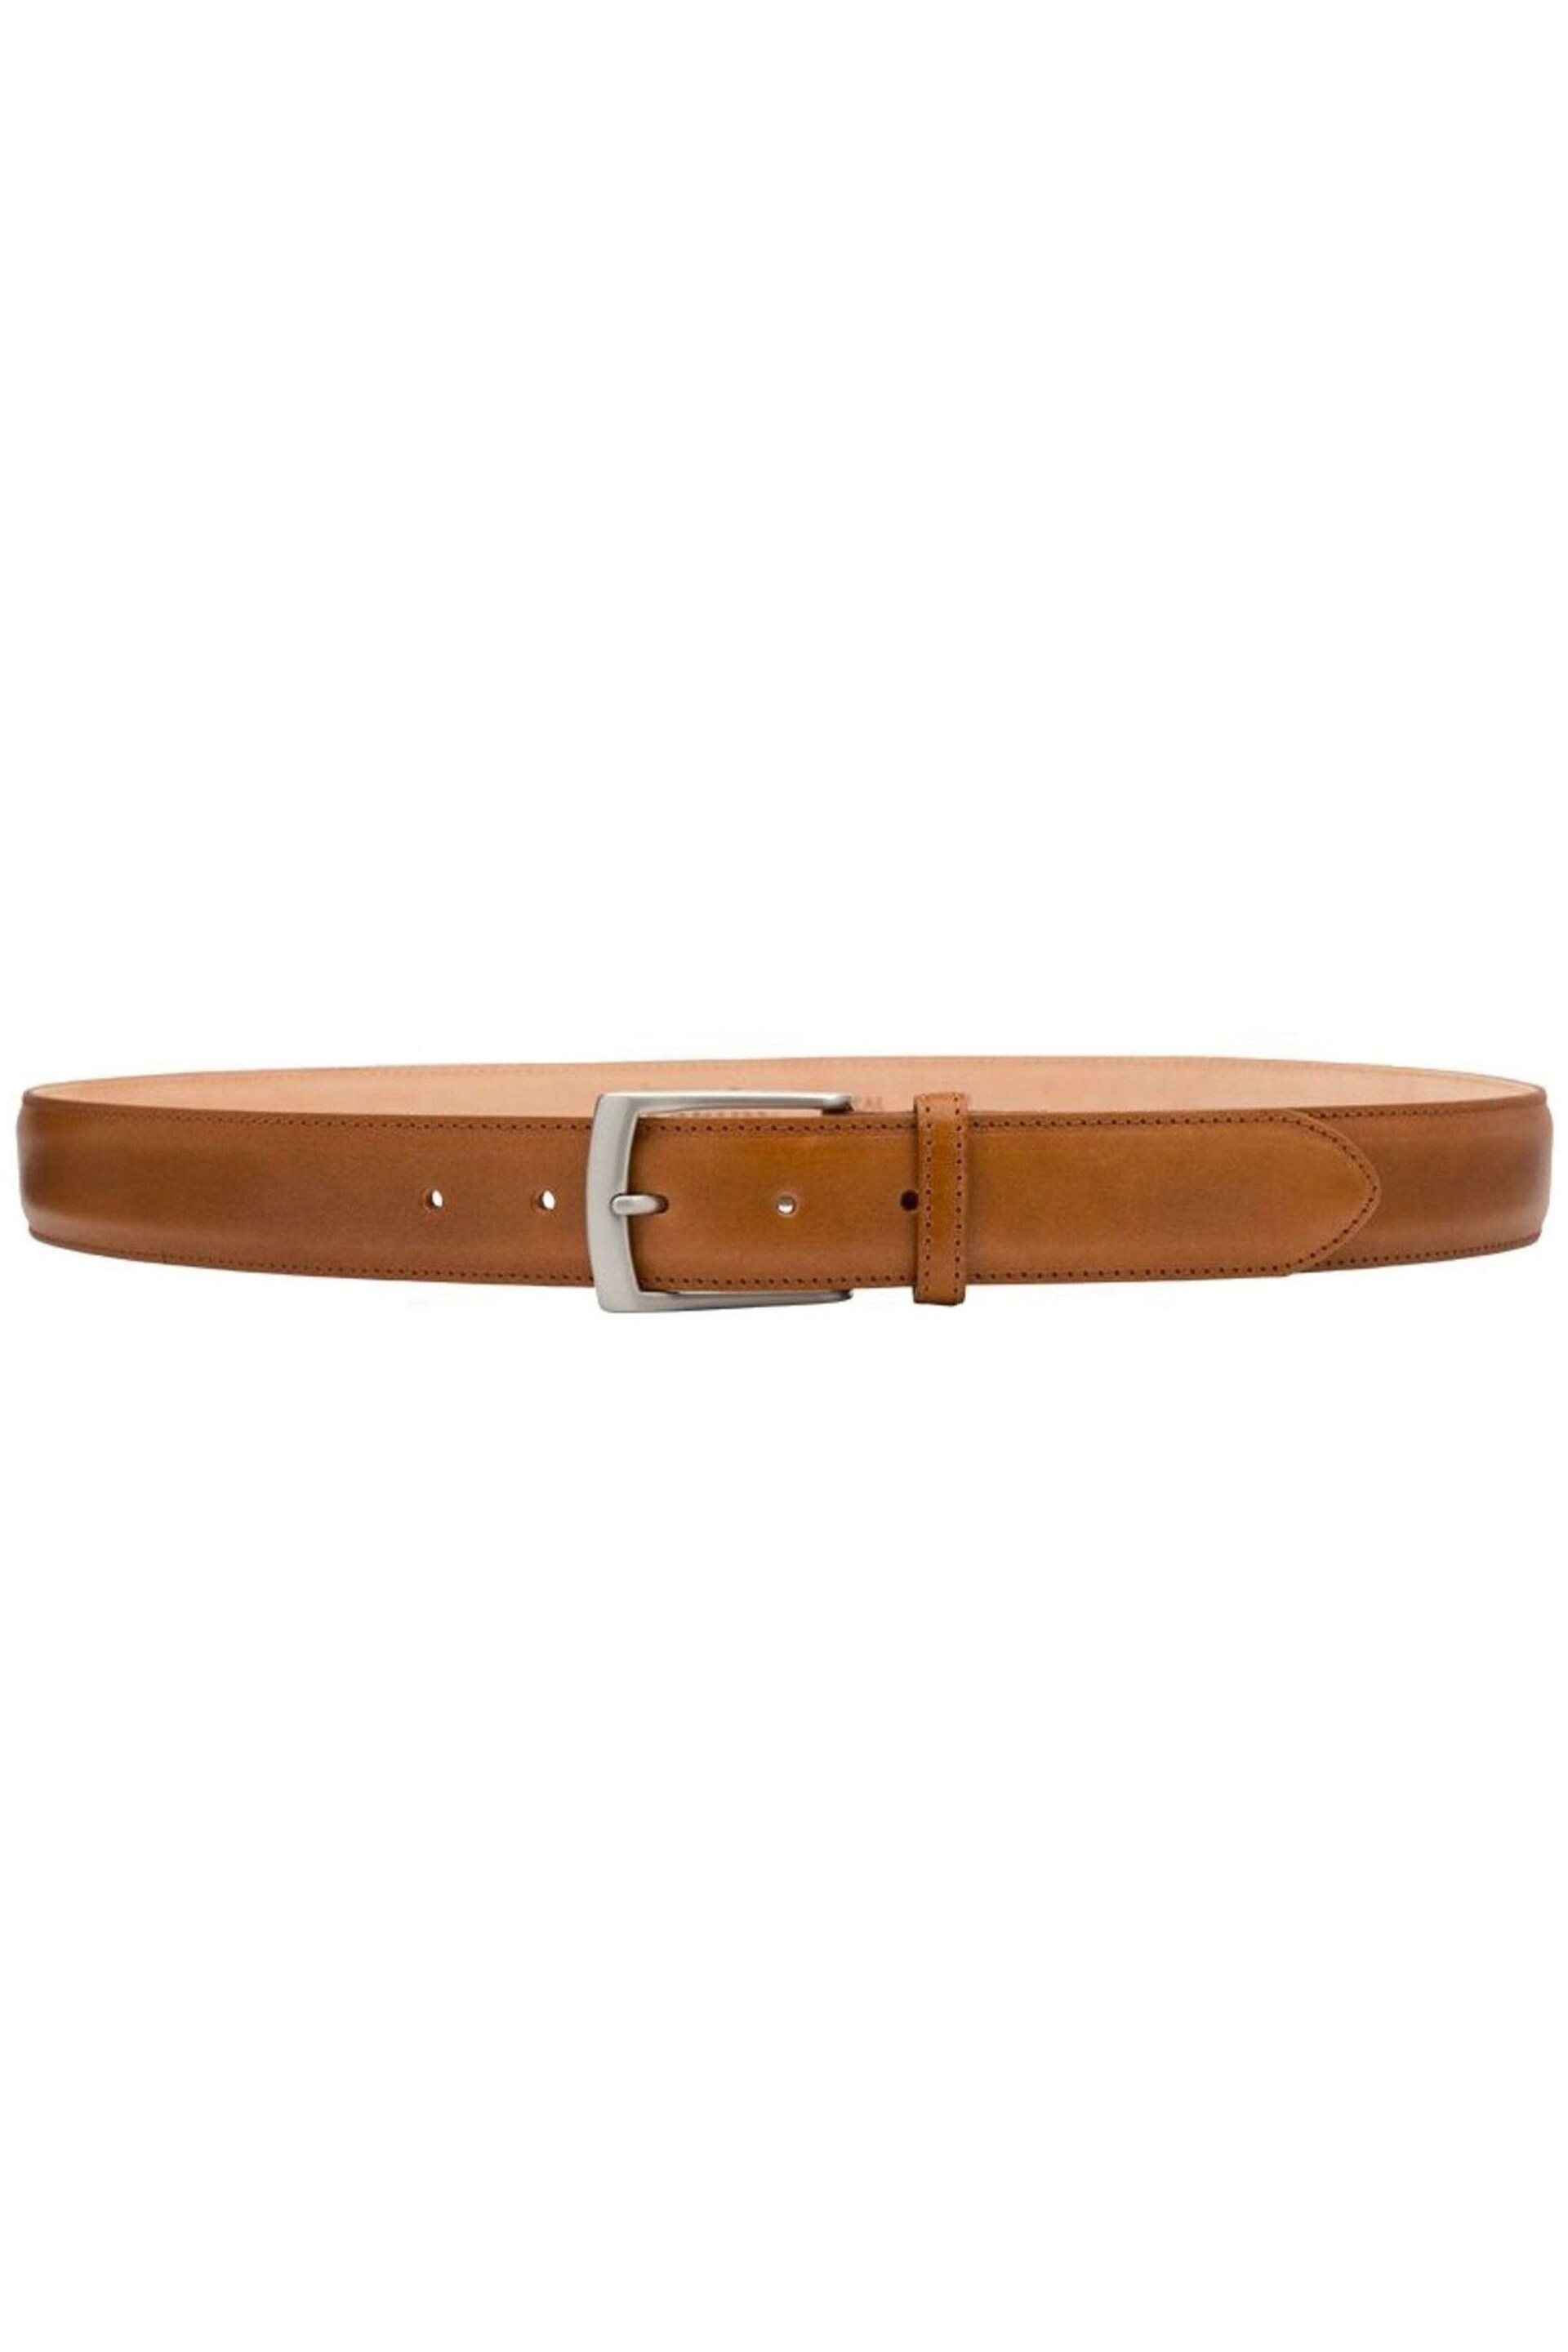 Loake Henry Leather Belt - Image 1 of 2